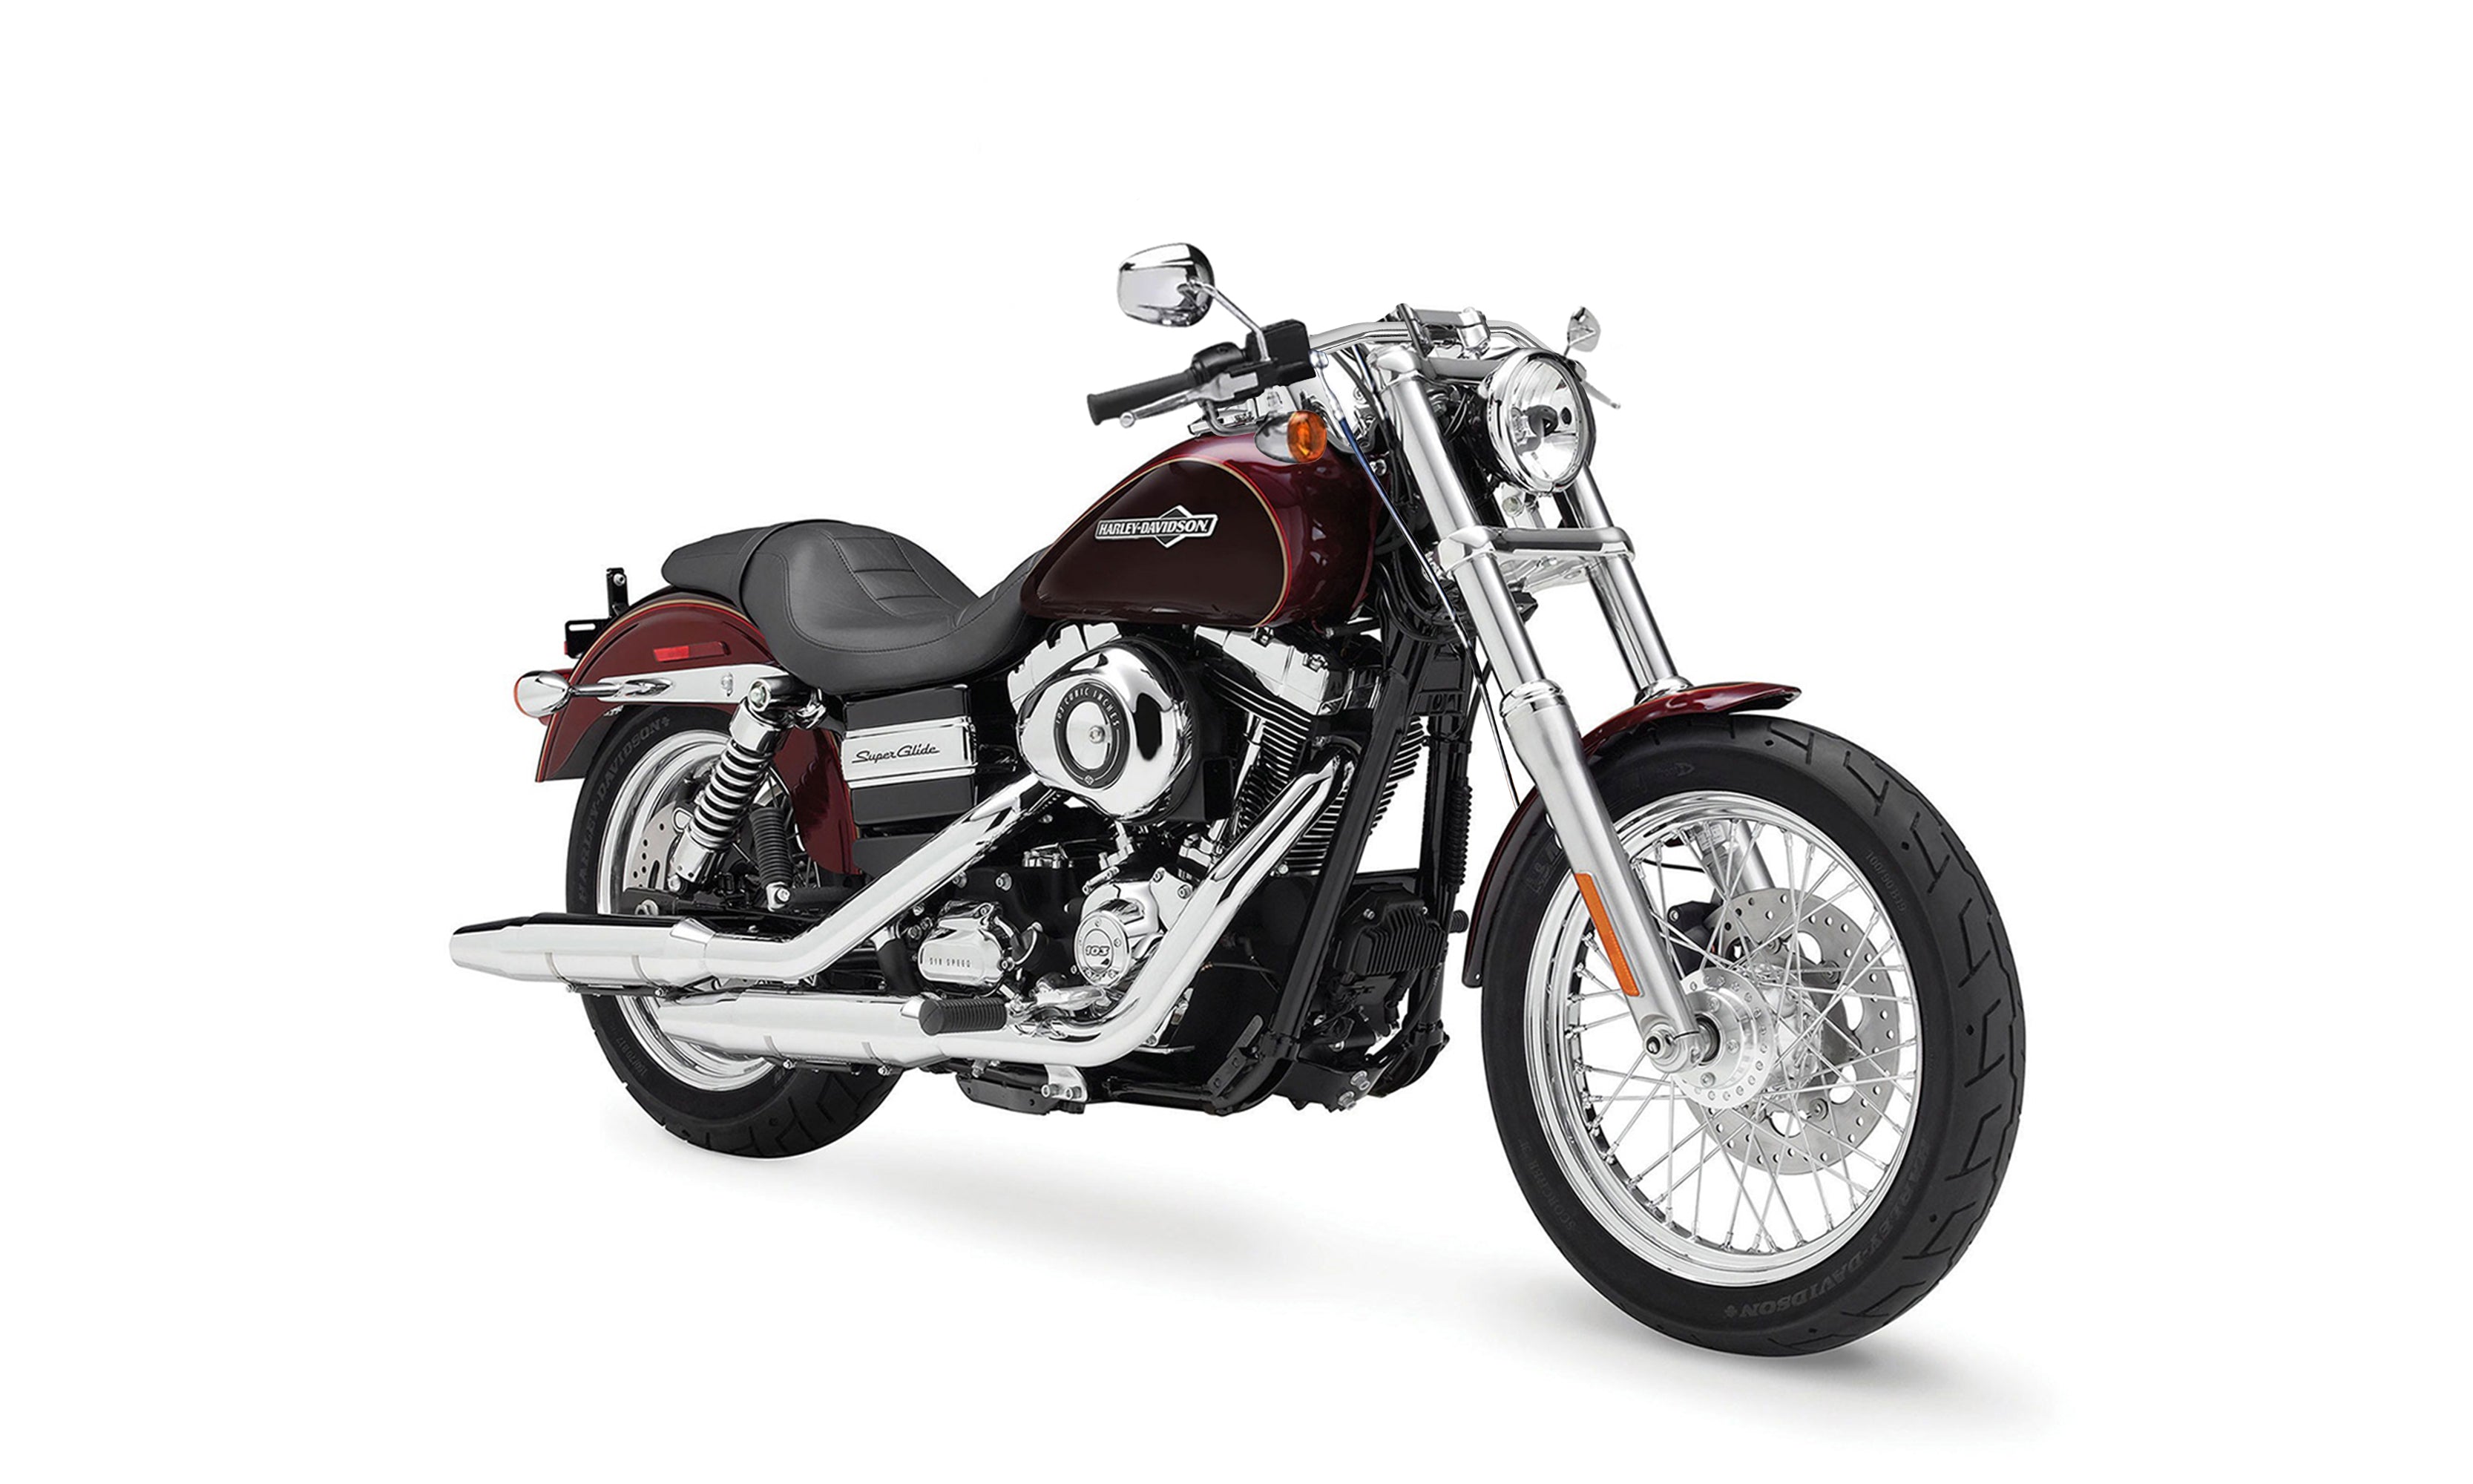 Viking Iron Born Drag Handlebar For Harley Dyna Super Glide FXD Chrome Bag on Bikes @expand